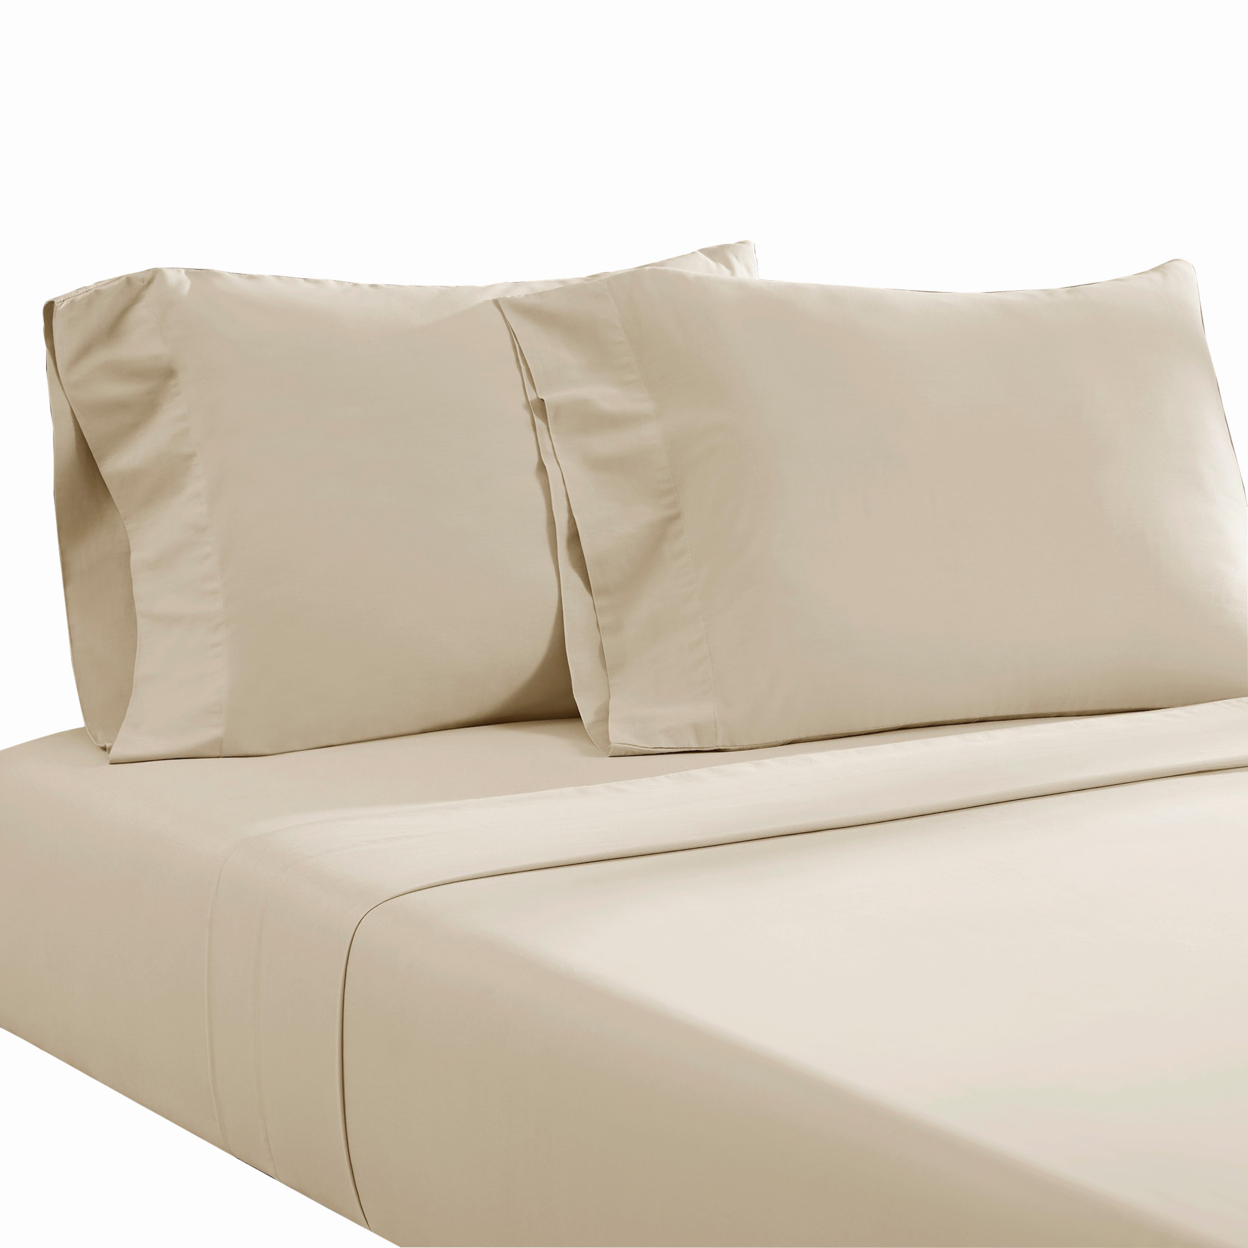 Ivy 4 Piece Full Size Cotton Ultra Soft Bed Sheet Set, Prewashed, Cream- Saltoro Sherpi